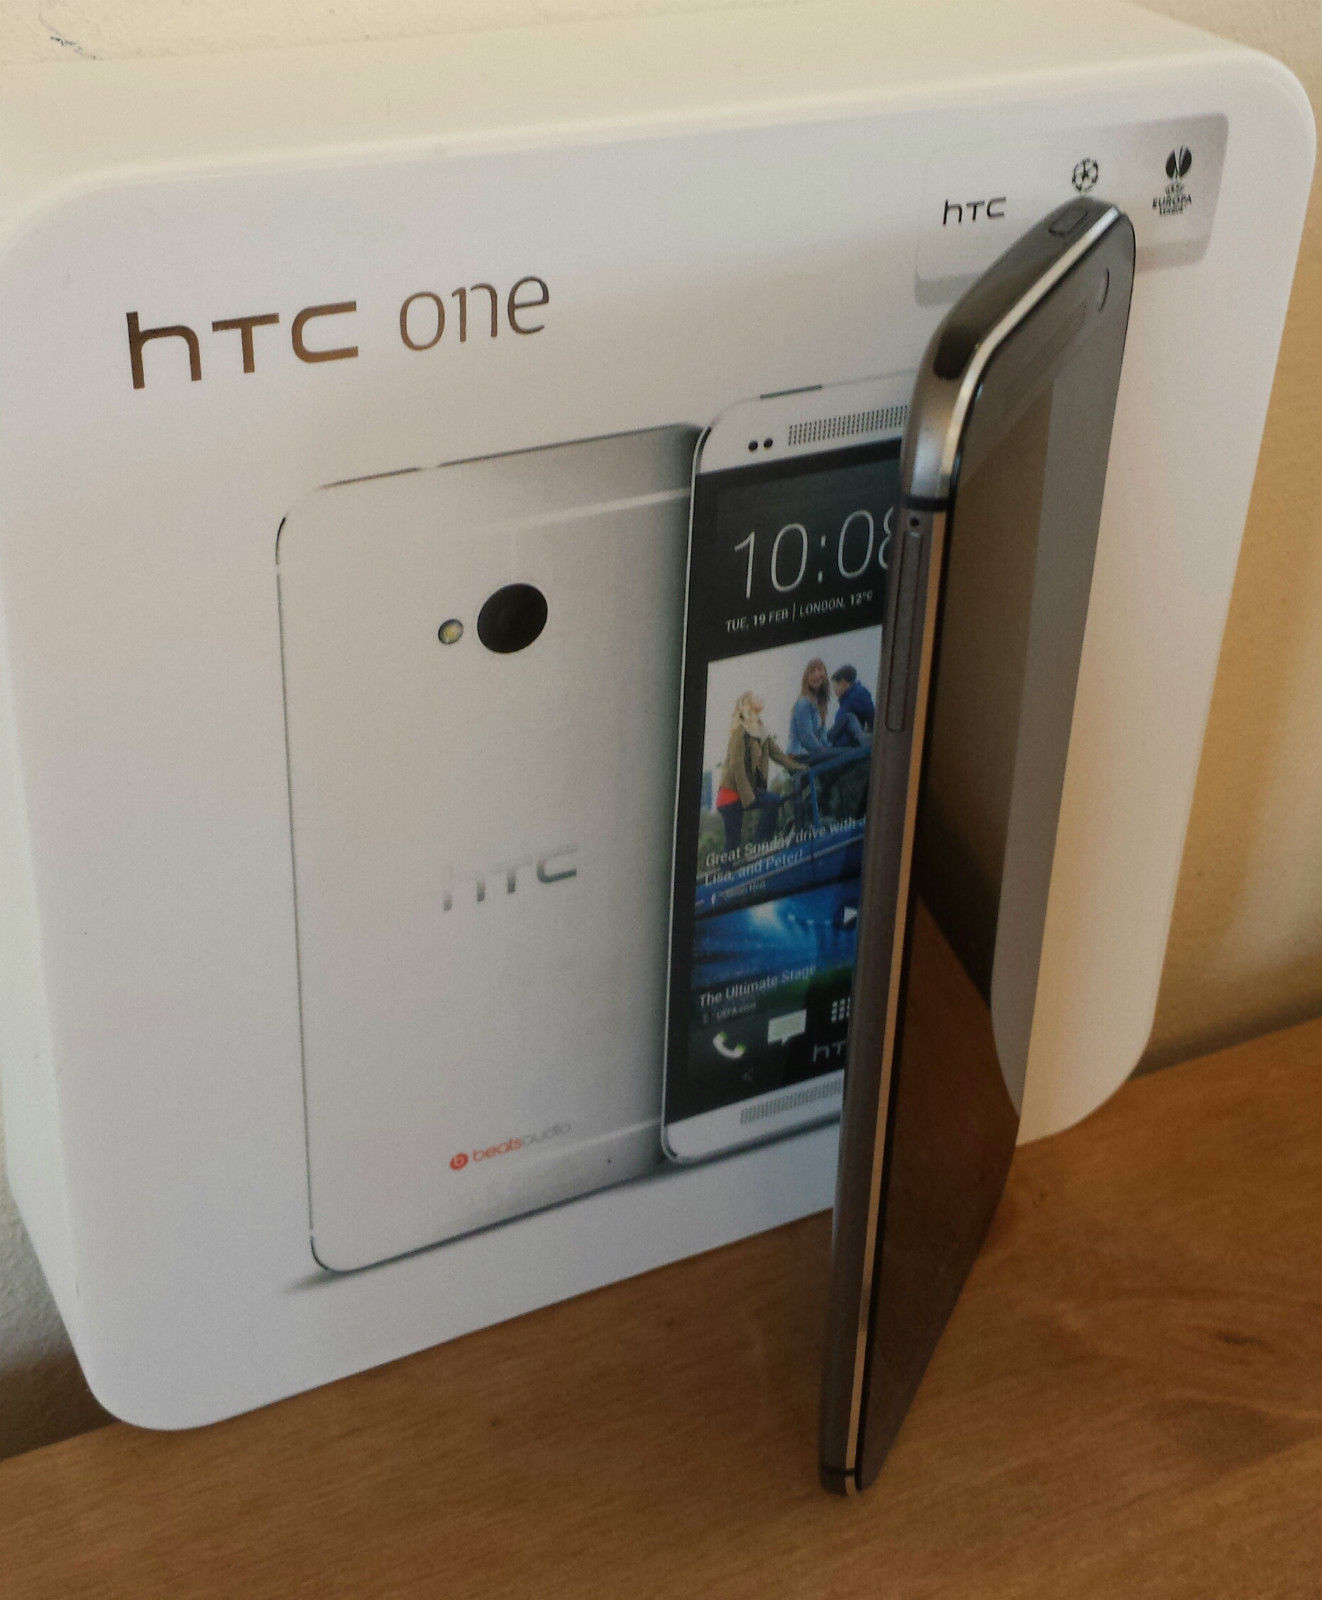 HTC One M8 (Latest Model) - 16 GB - Gunmetal Gray (Unlocked) Smartphone